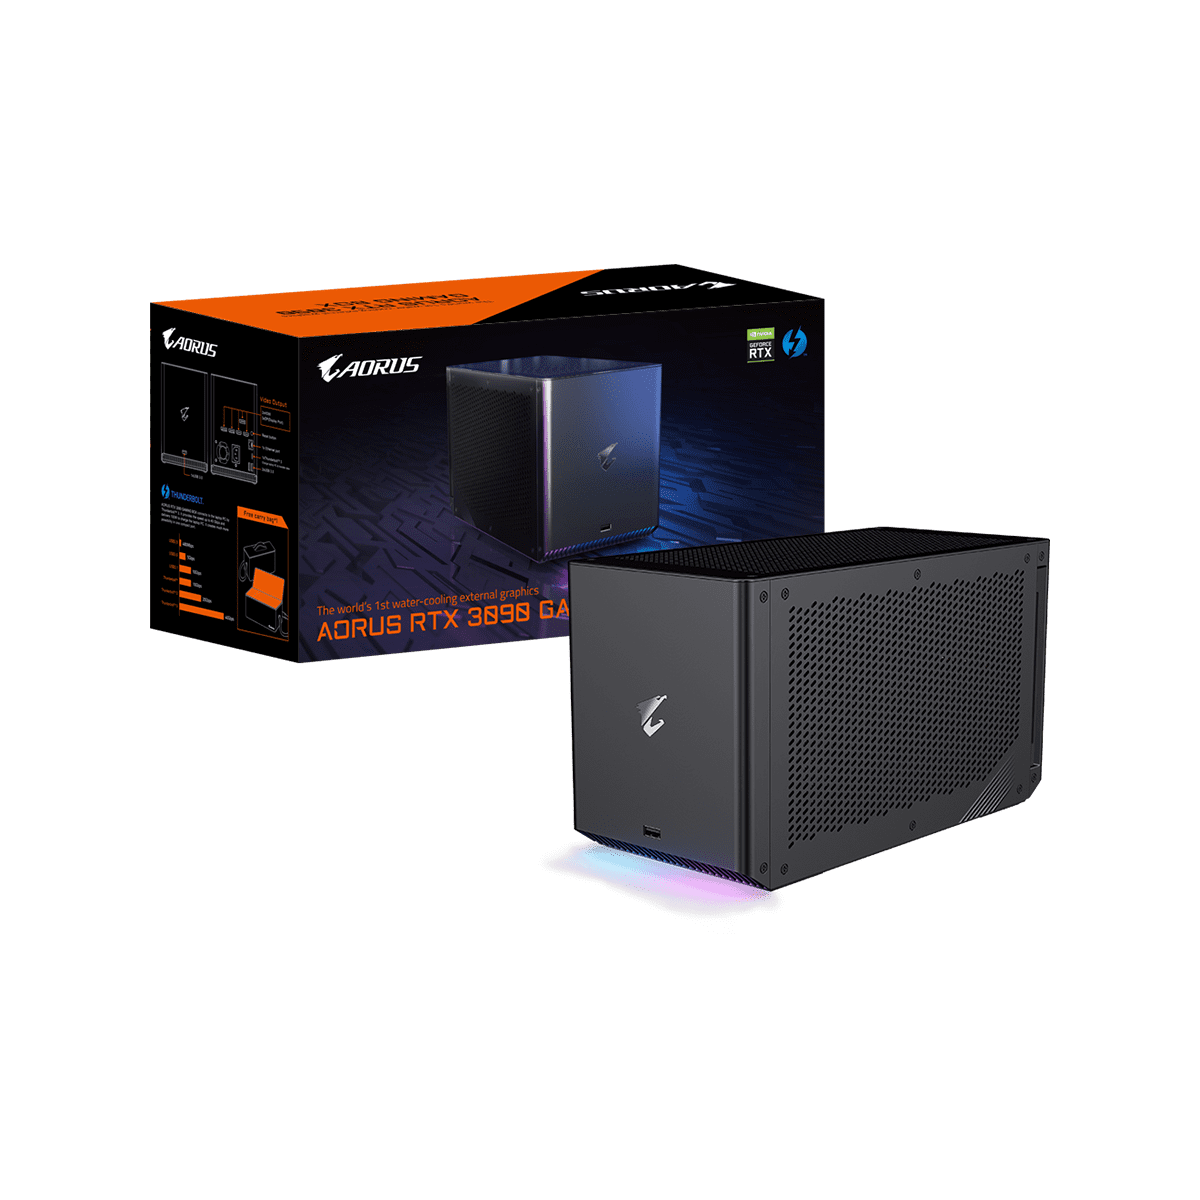 GeForce RTX3090 | PCパーツメーカーの総合サプライヤーCFD販売の法人専用卸売サイト CFD-BIZ.com